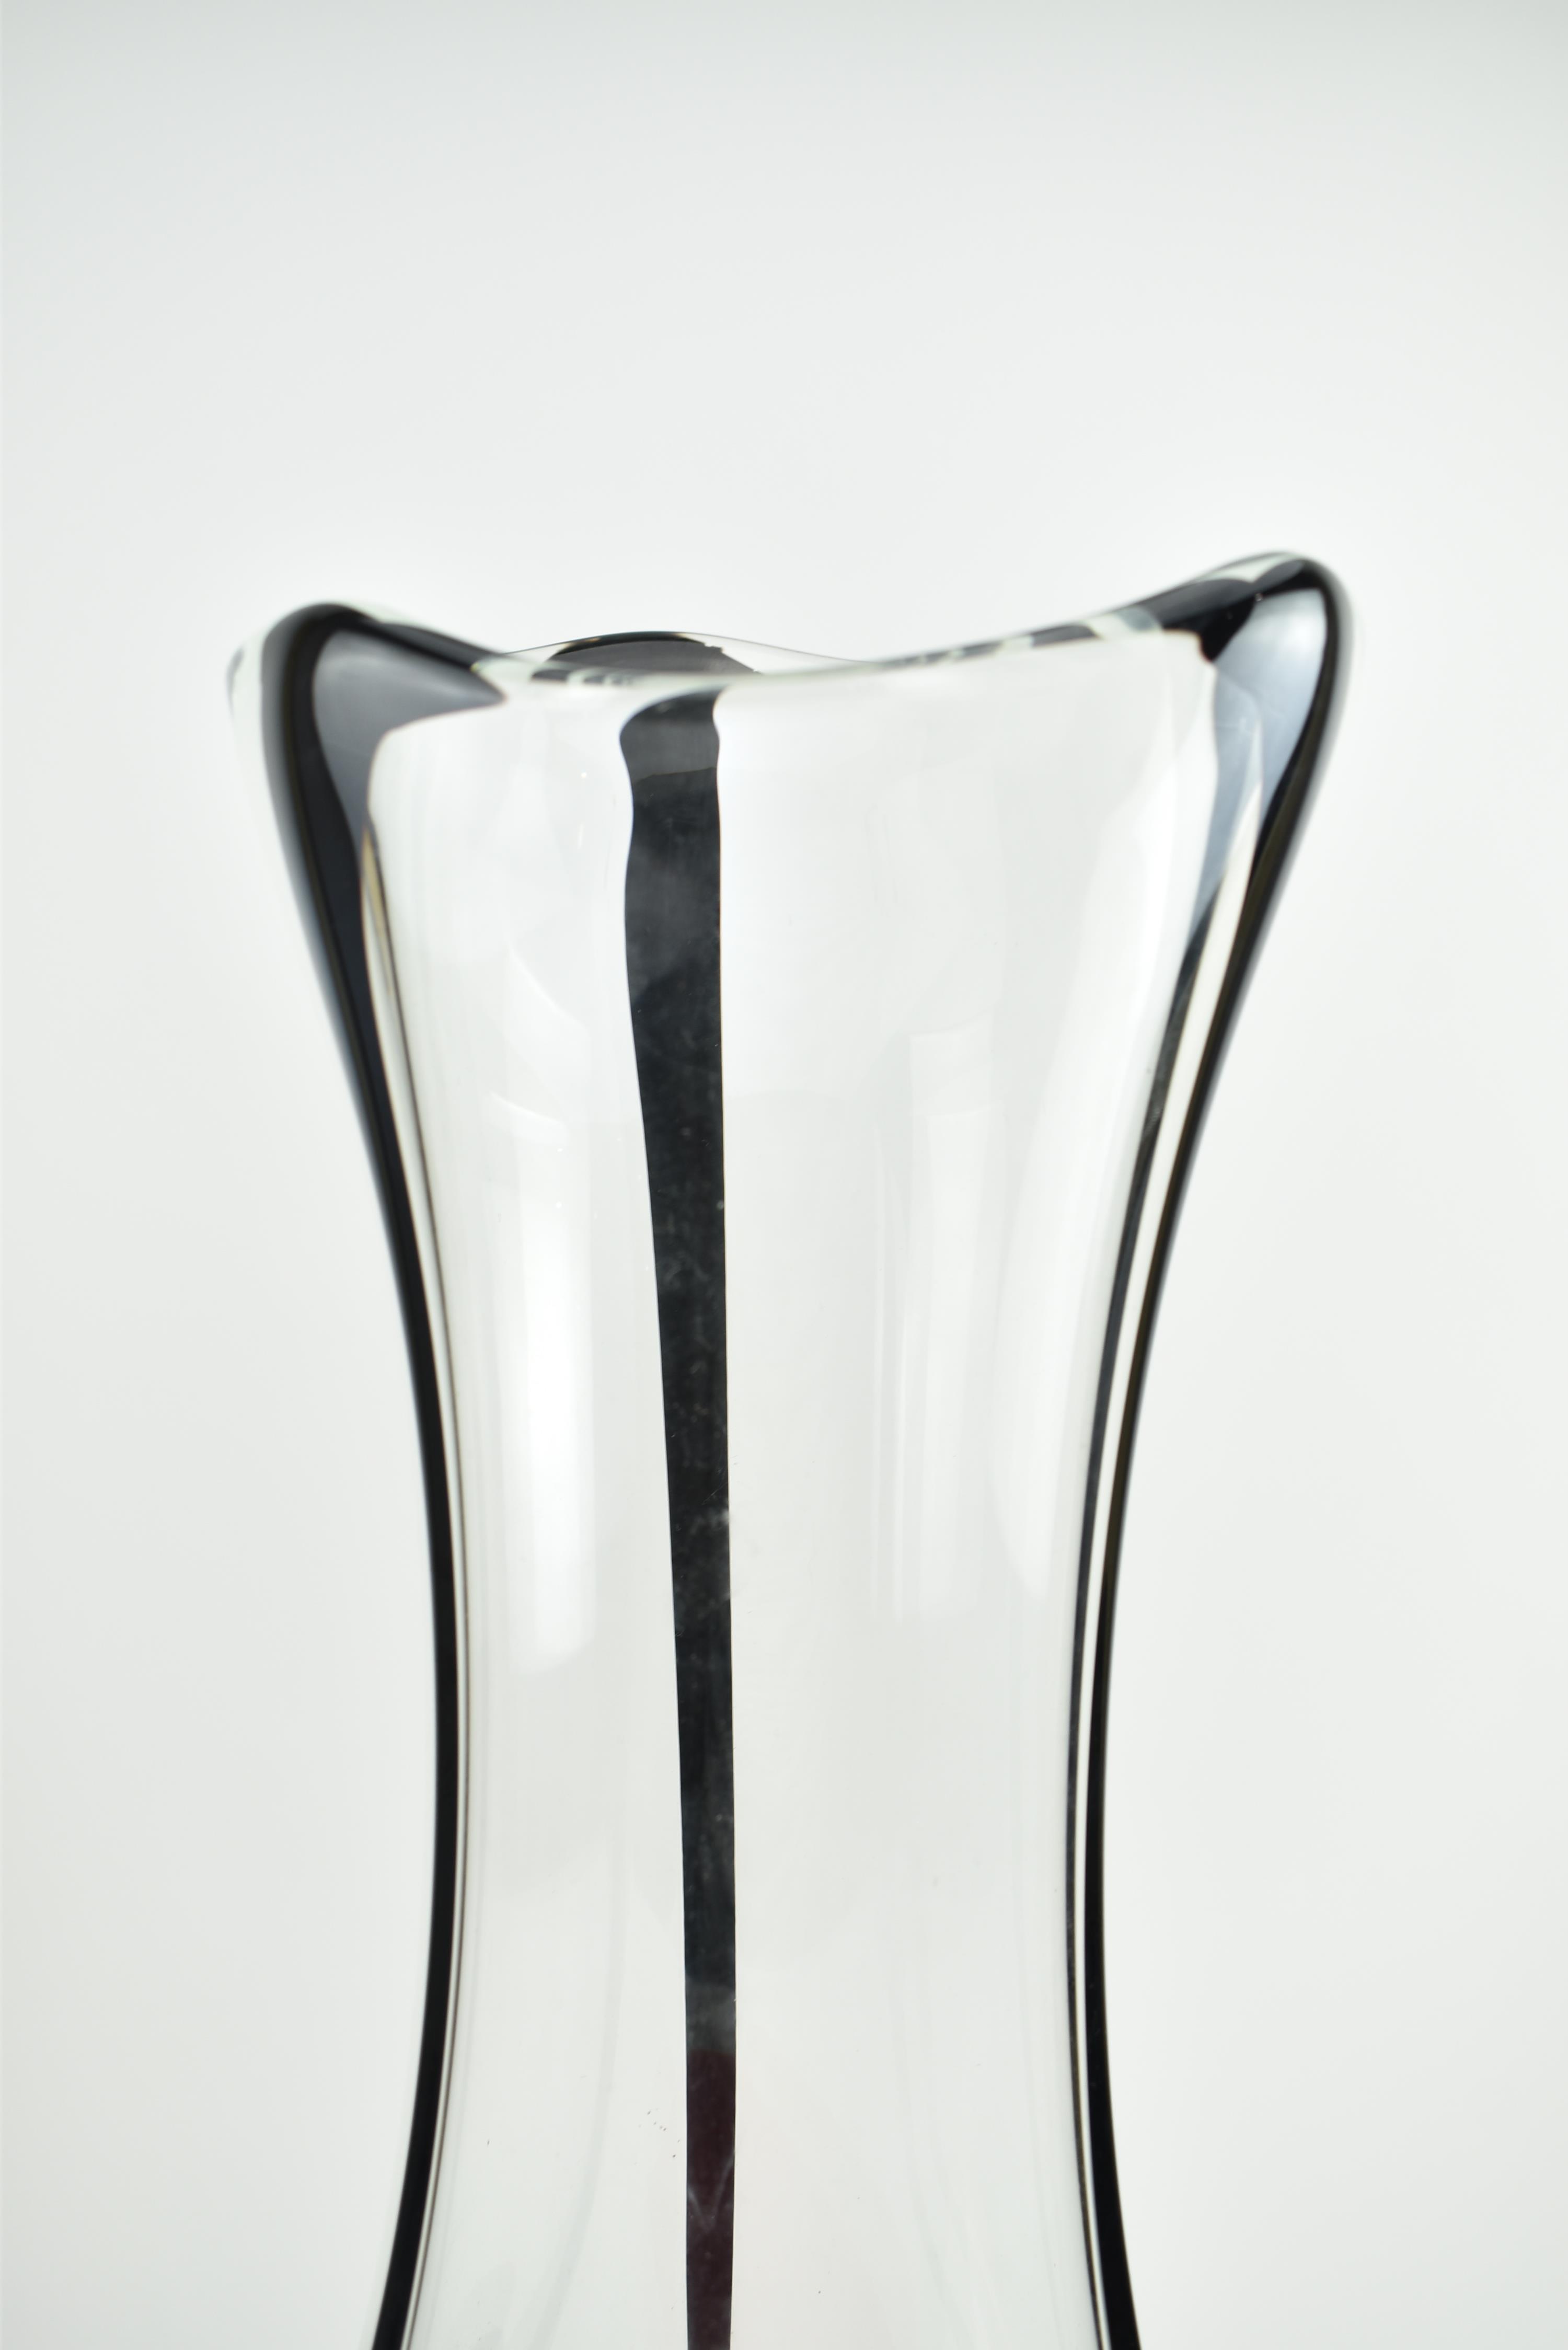 LARGE SVAJA CRIMSON HANDMADE ORCHID GLASS VASE - Image 4 of 7